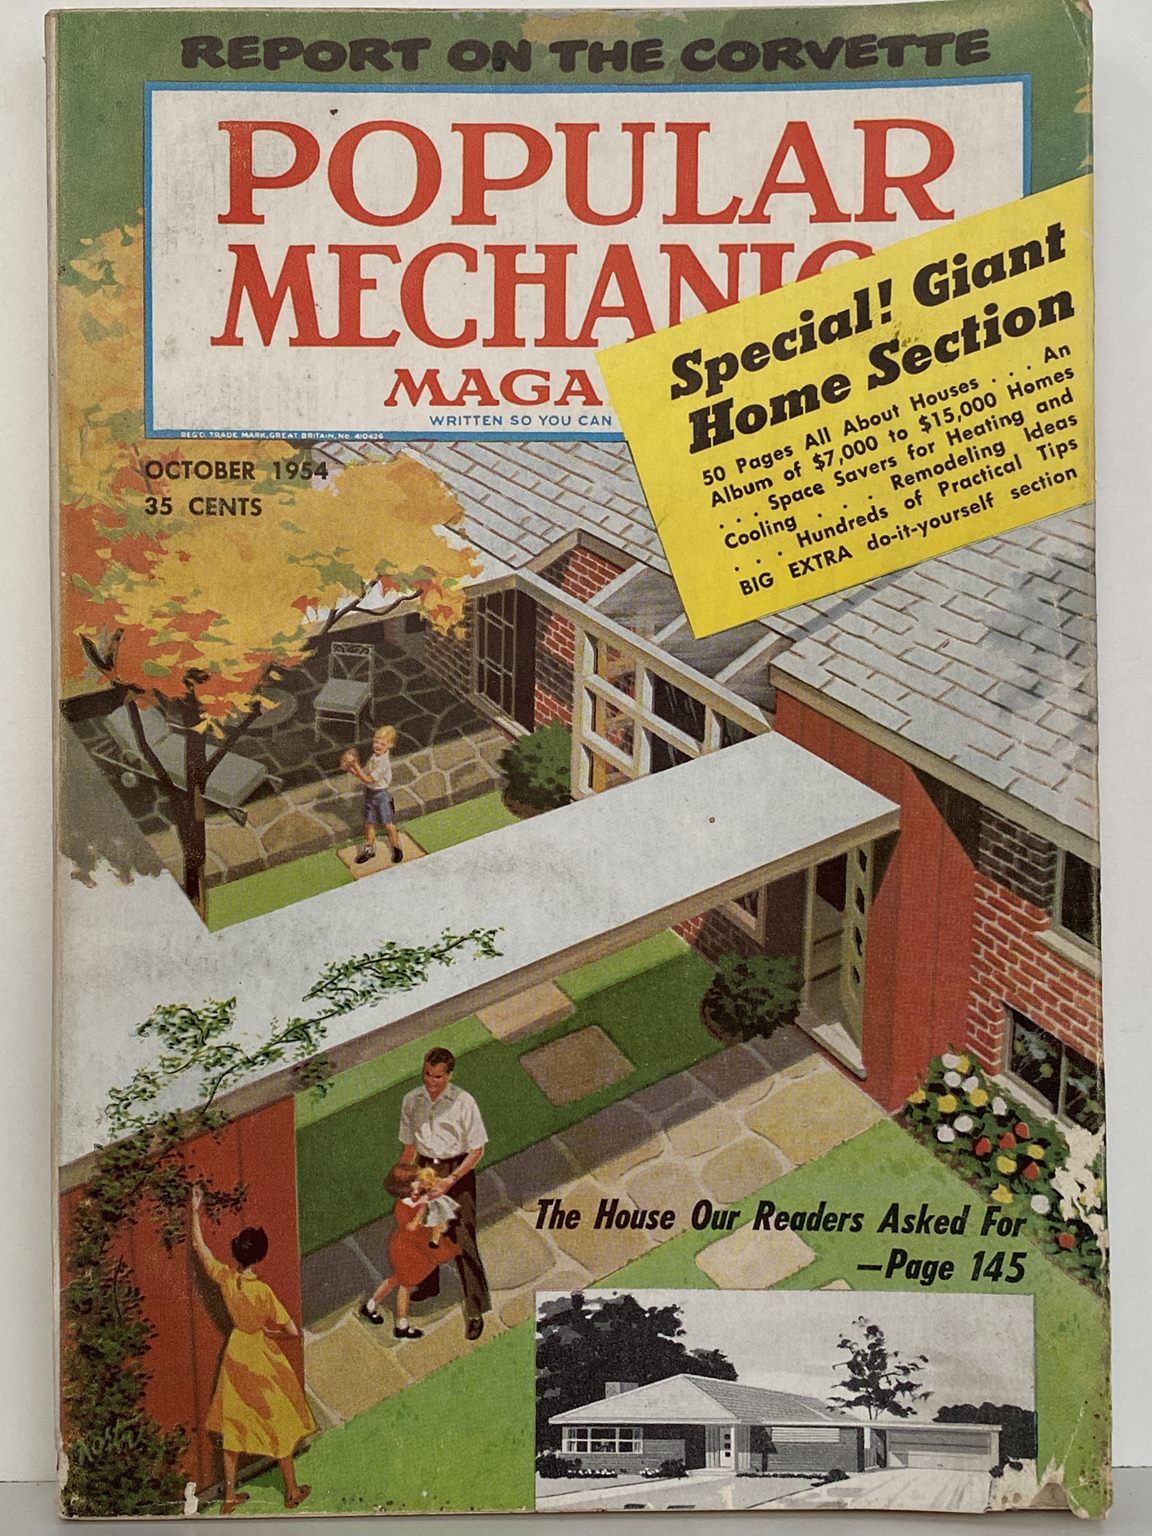 VINTAGE MAGAZINE: Popular Mechanics - Vol. 102, No. 4 - October 1954